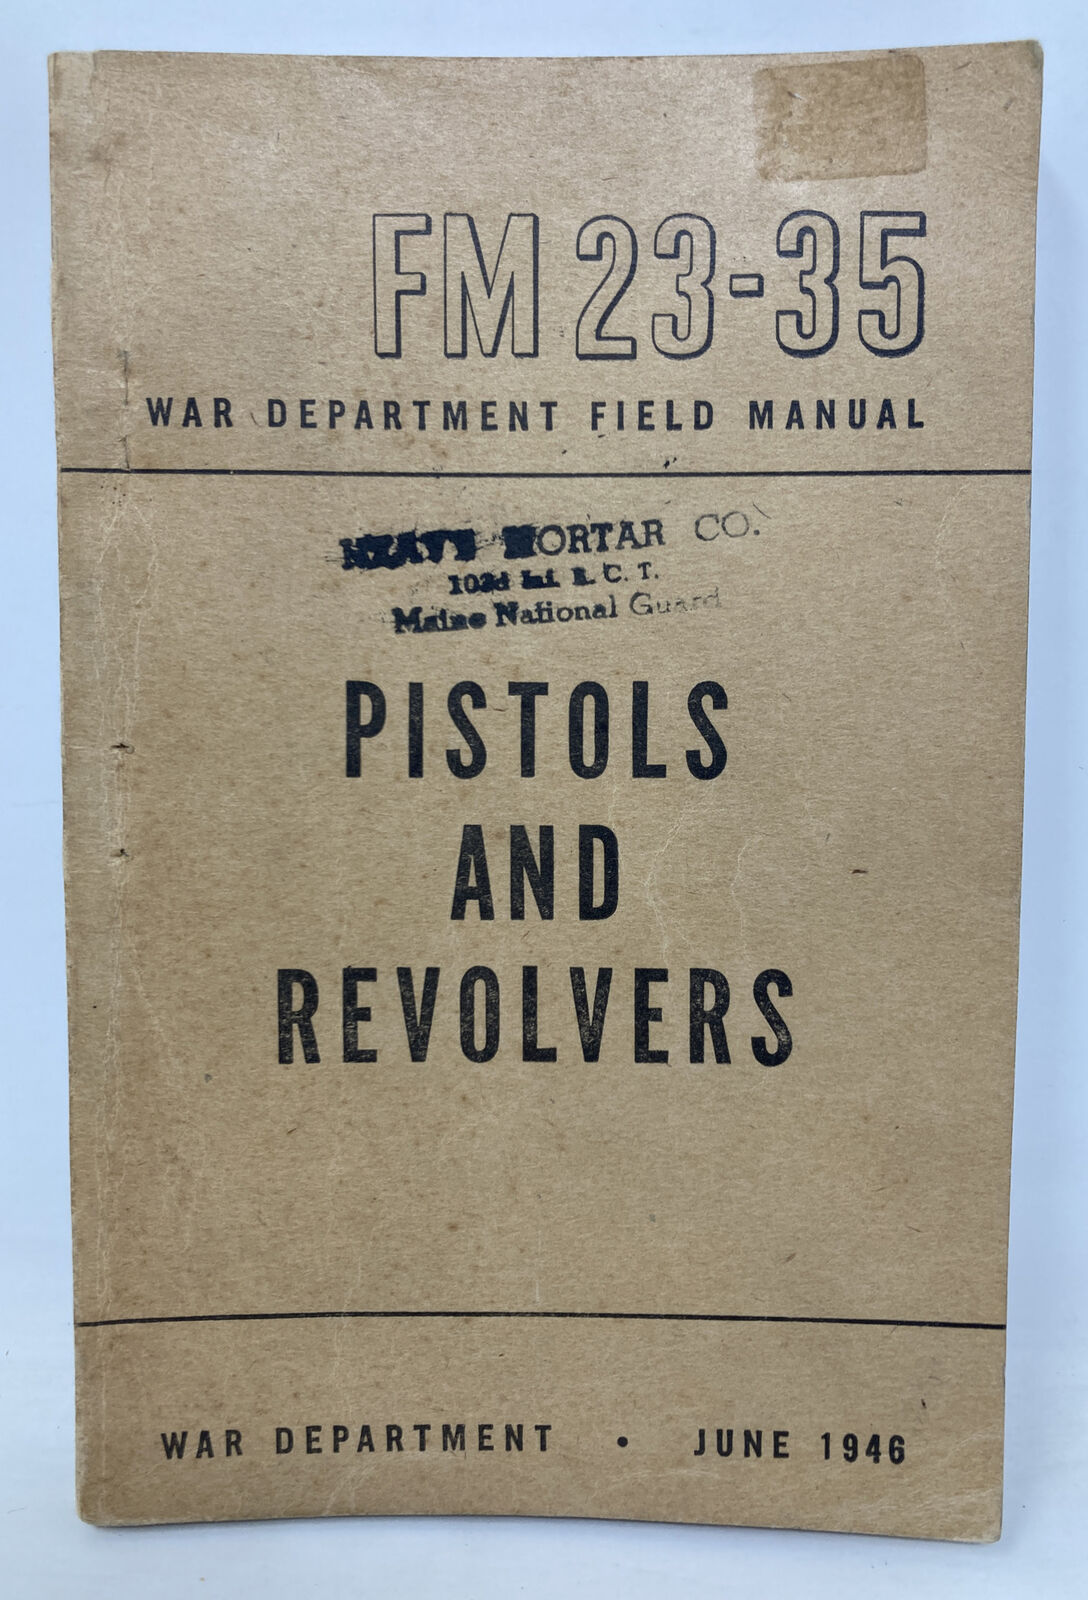 War Department Manual Book FM 23-35 Pistols & Revolvers June 1946 - library